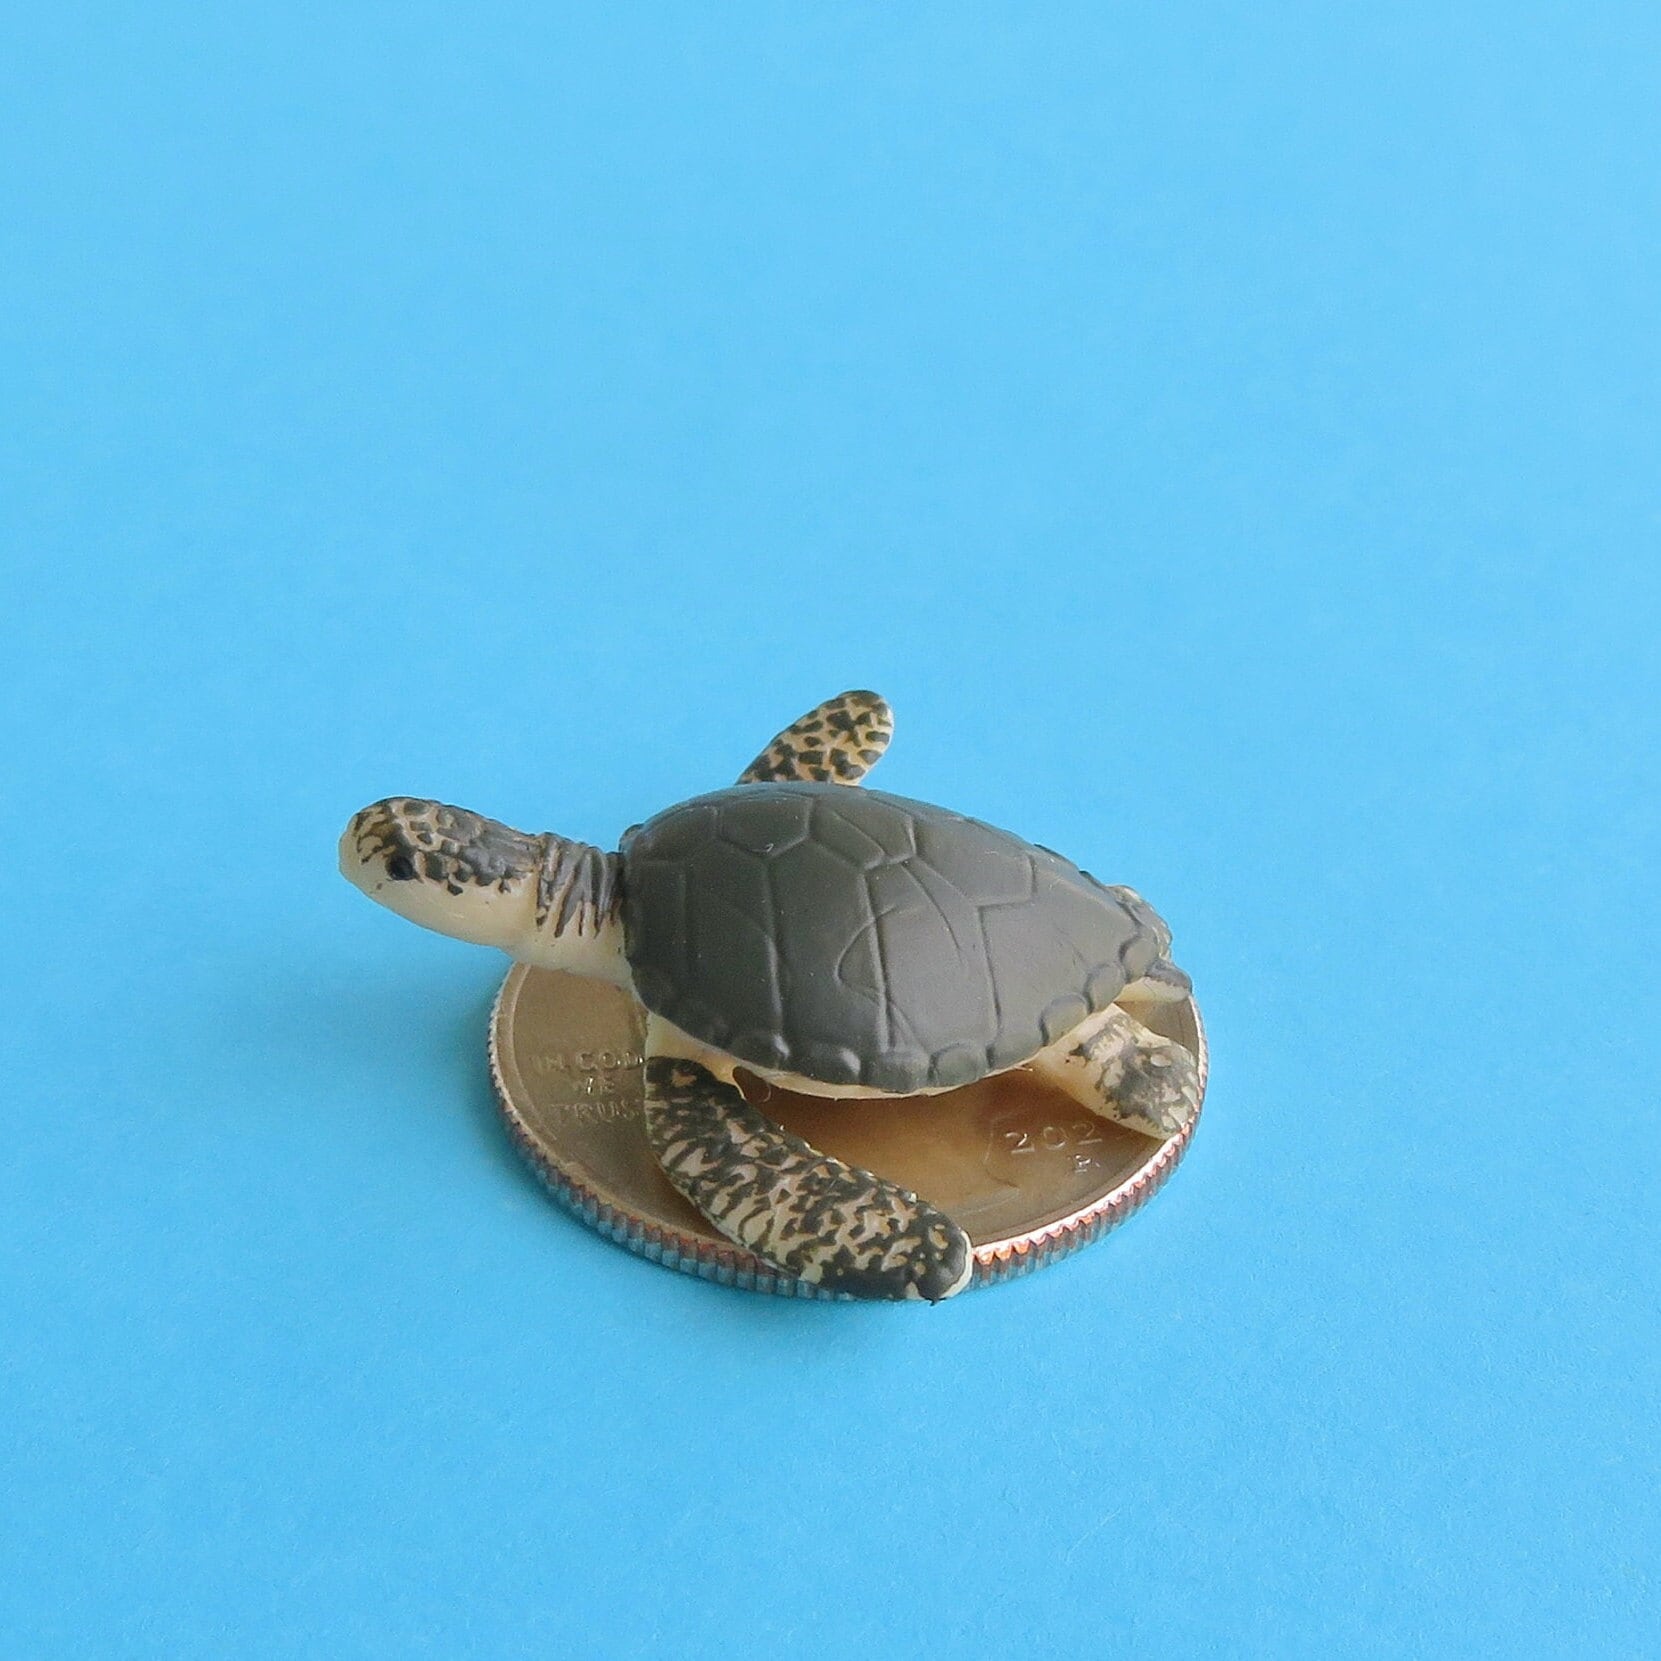 Mini Turtles Miniature Figurines Turtle Simulation Wresin Statue for Home Decor,SimulationAnimal Resin Garden Ornaments Realistic Sea Turtles Resin